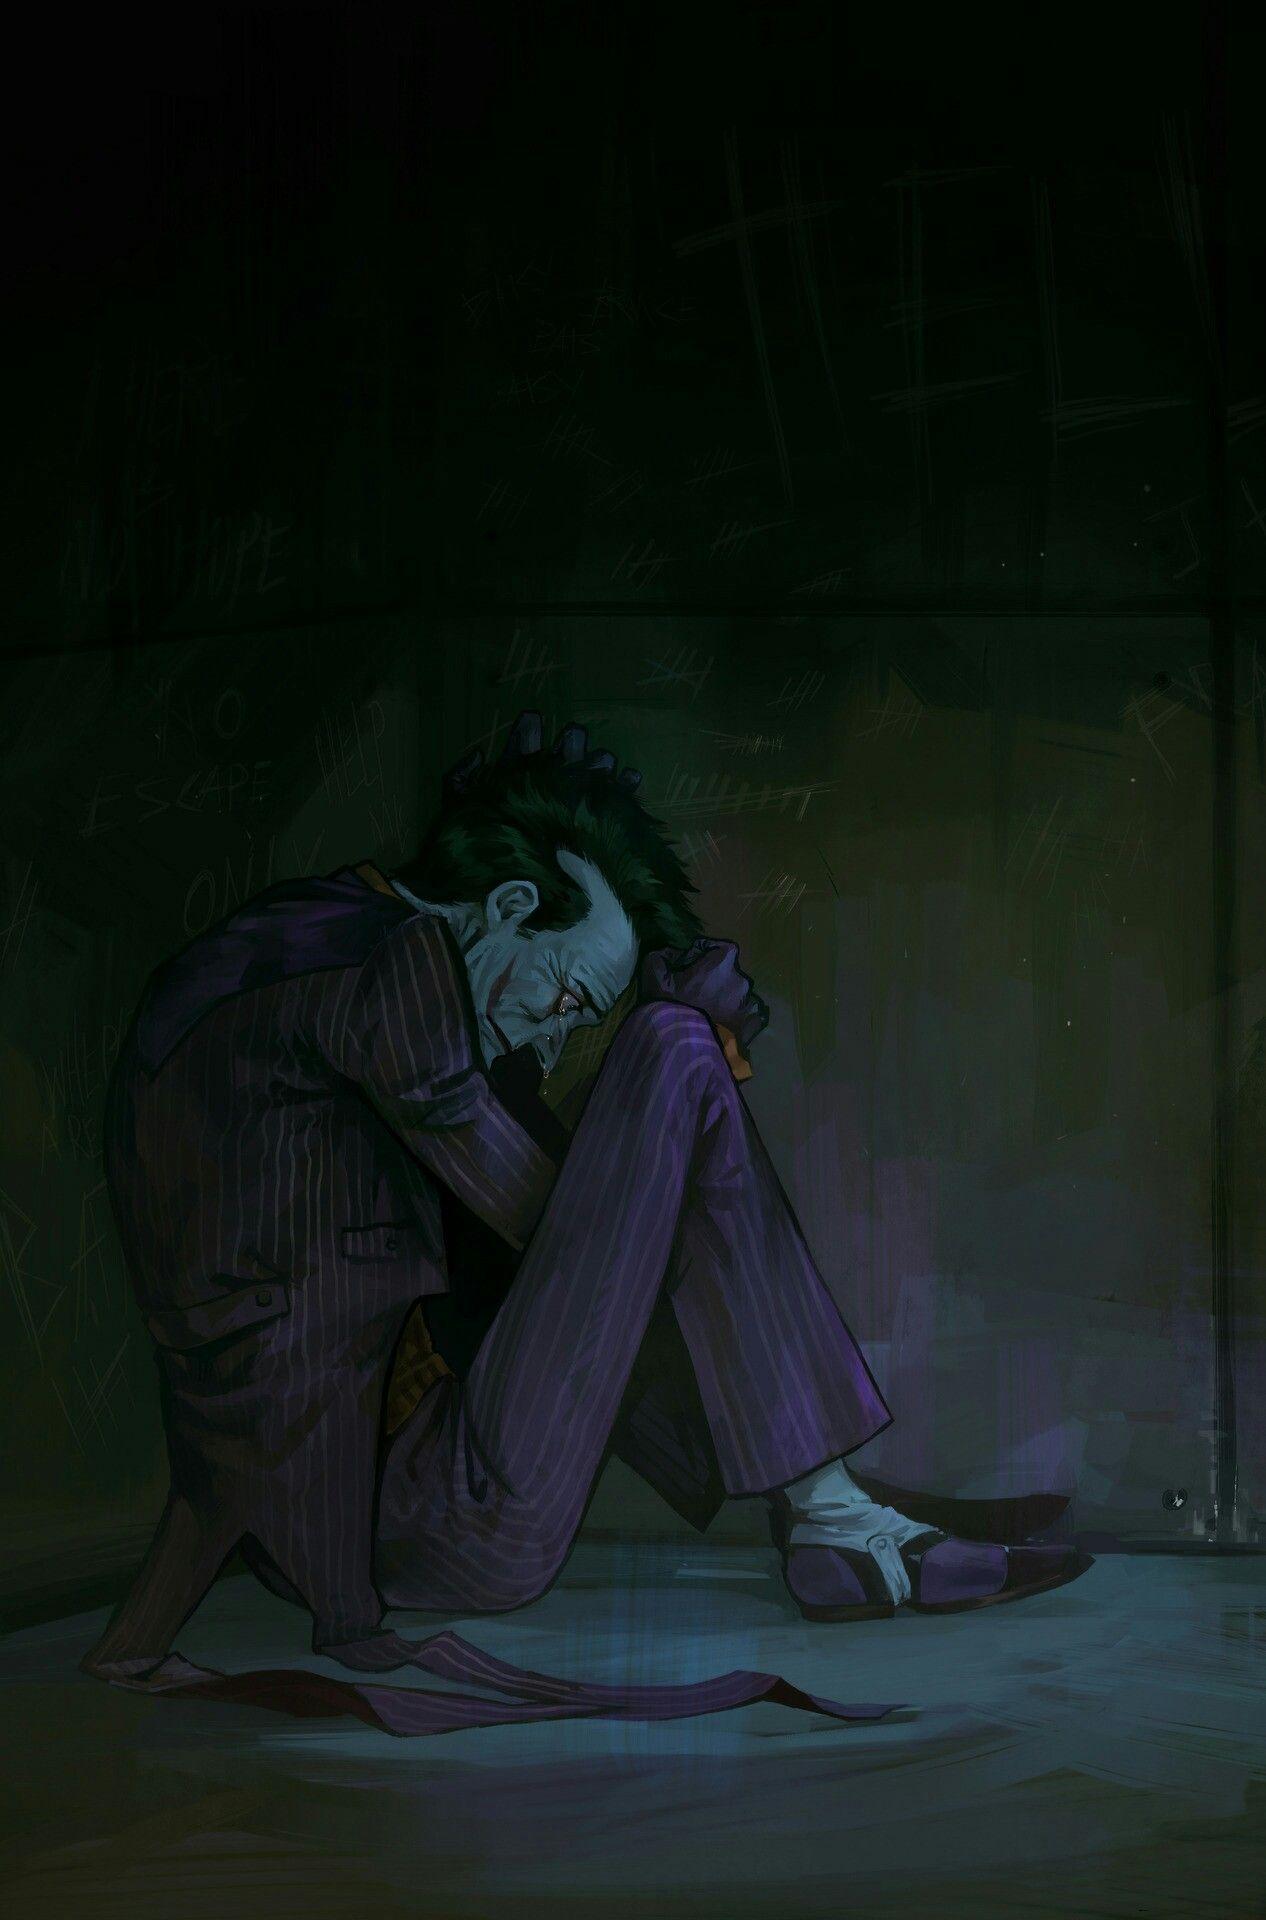 936 Wallpaper Joker Sad For FREE - MyWeb